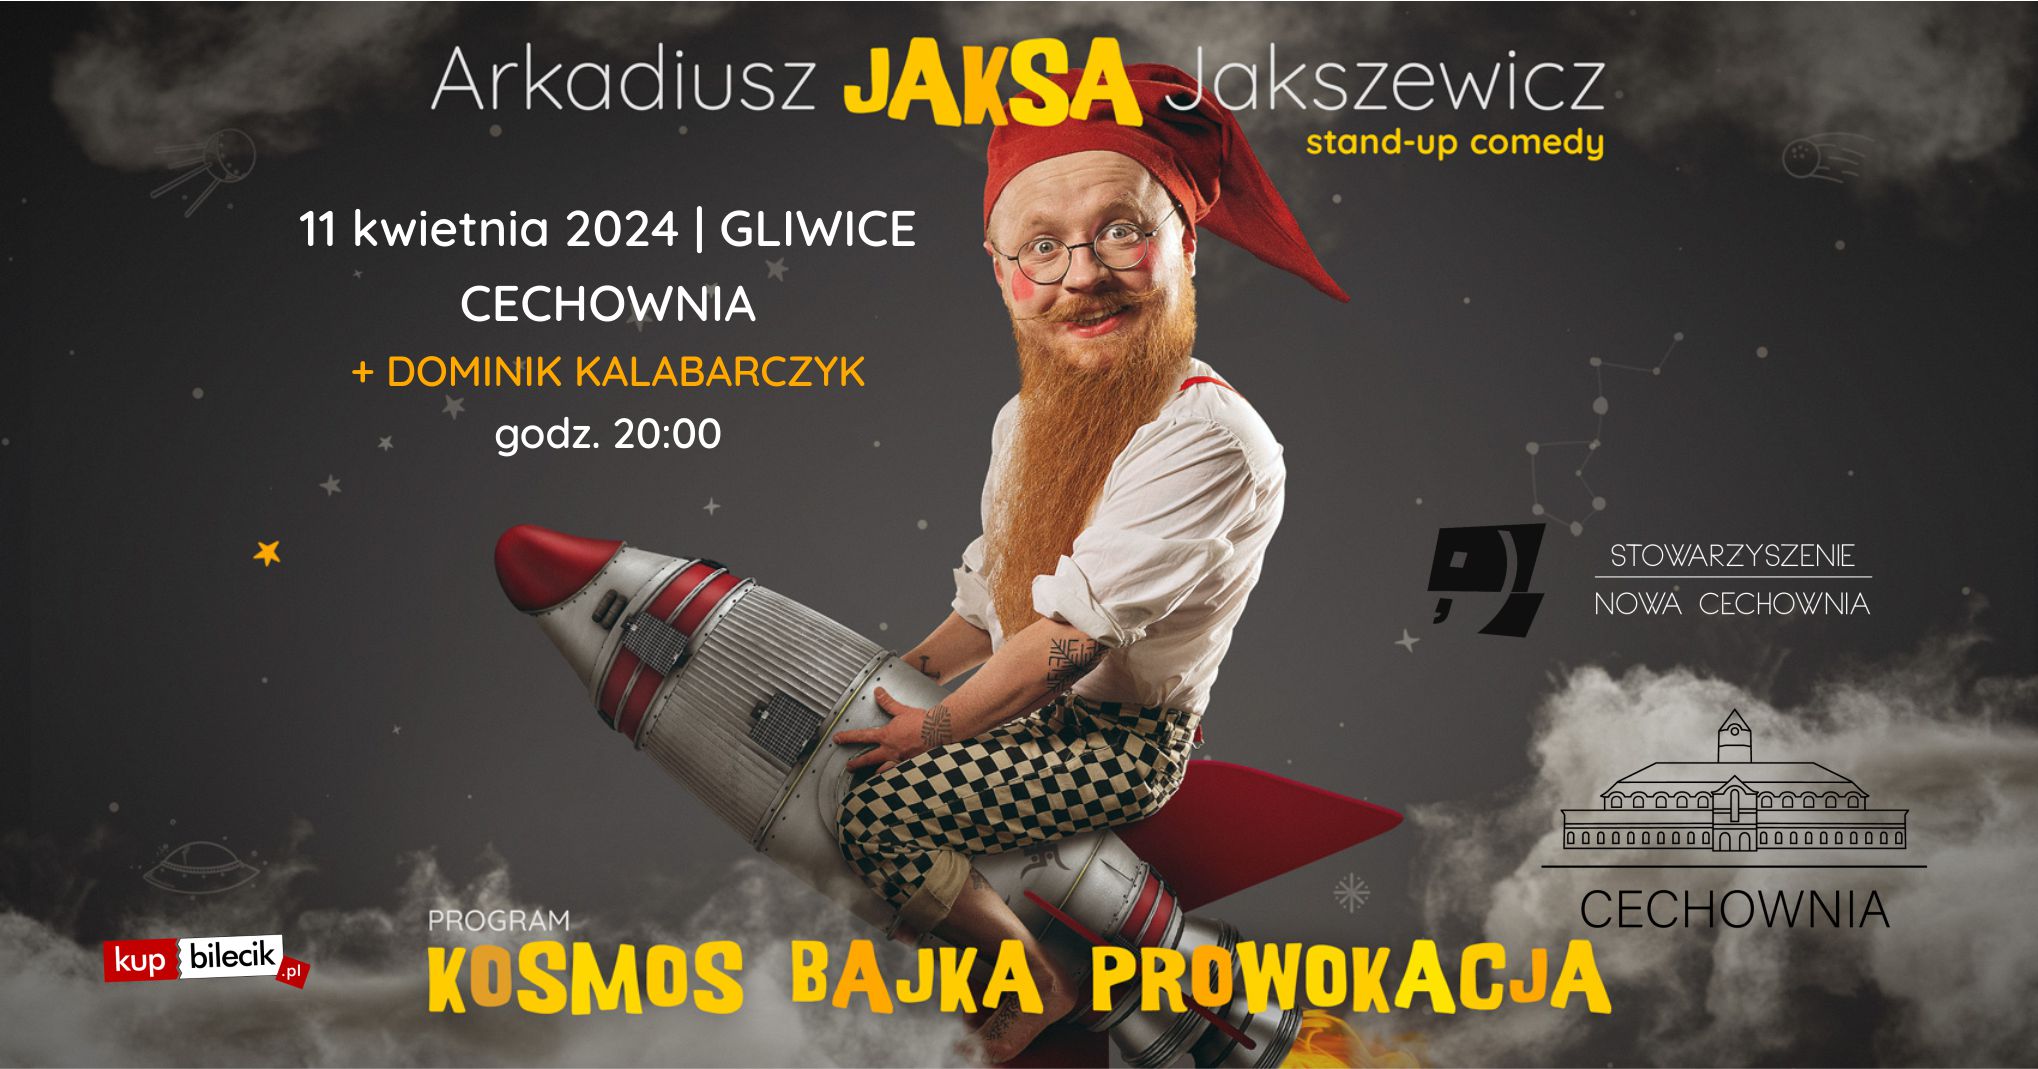 Arkadiusz_Jaksa_Jakszewicz_Cechownia_Gliwice_stand-up